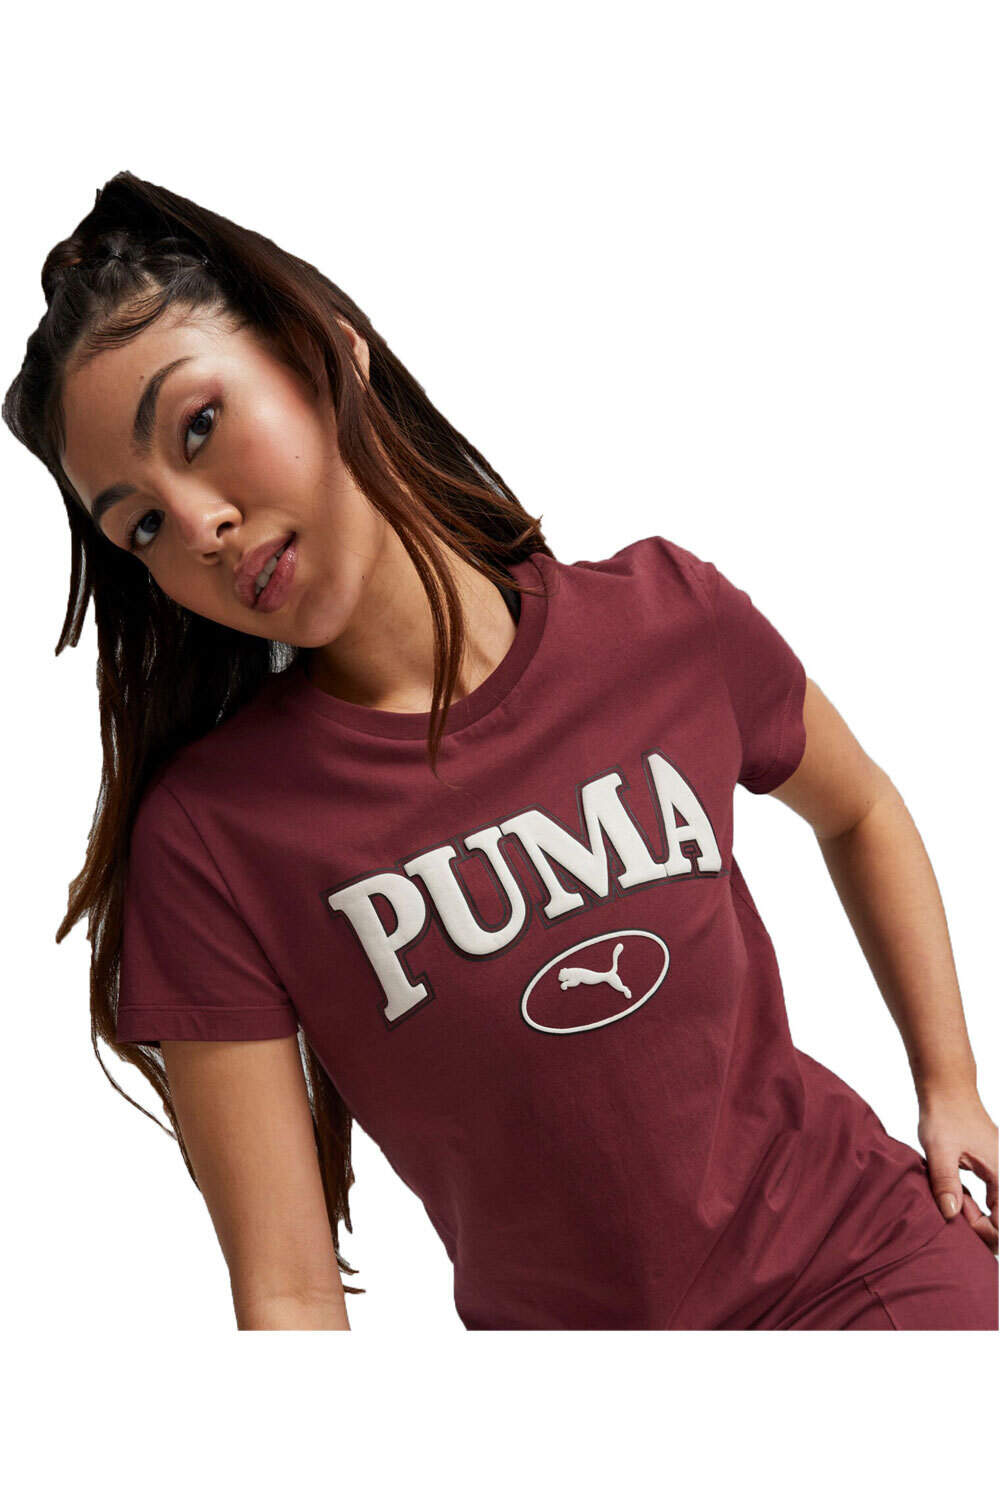 Puma camiseta manga corta mujer PUMA SQUAD Graphic T vista frontal